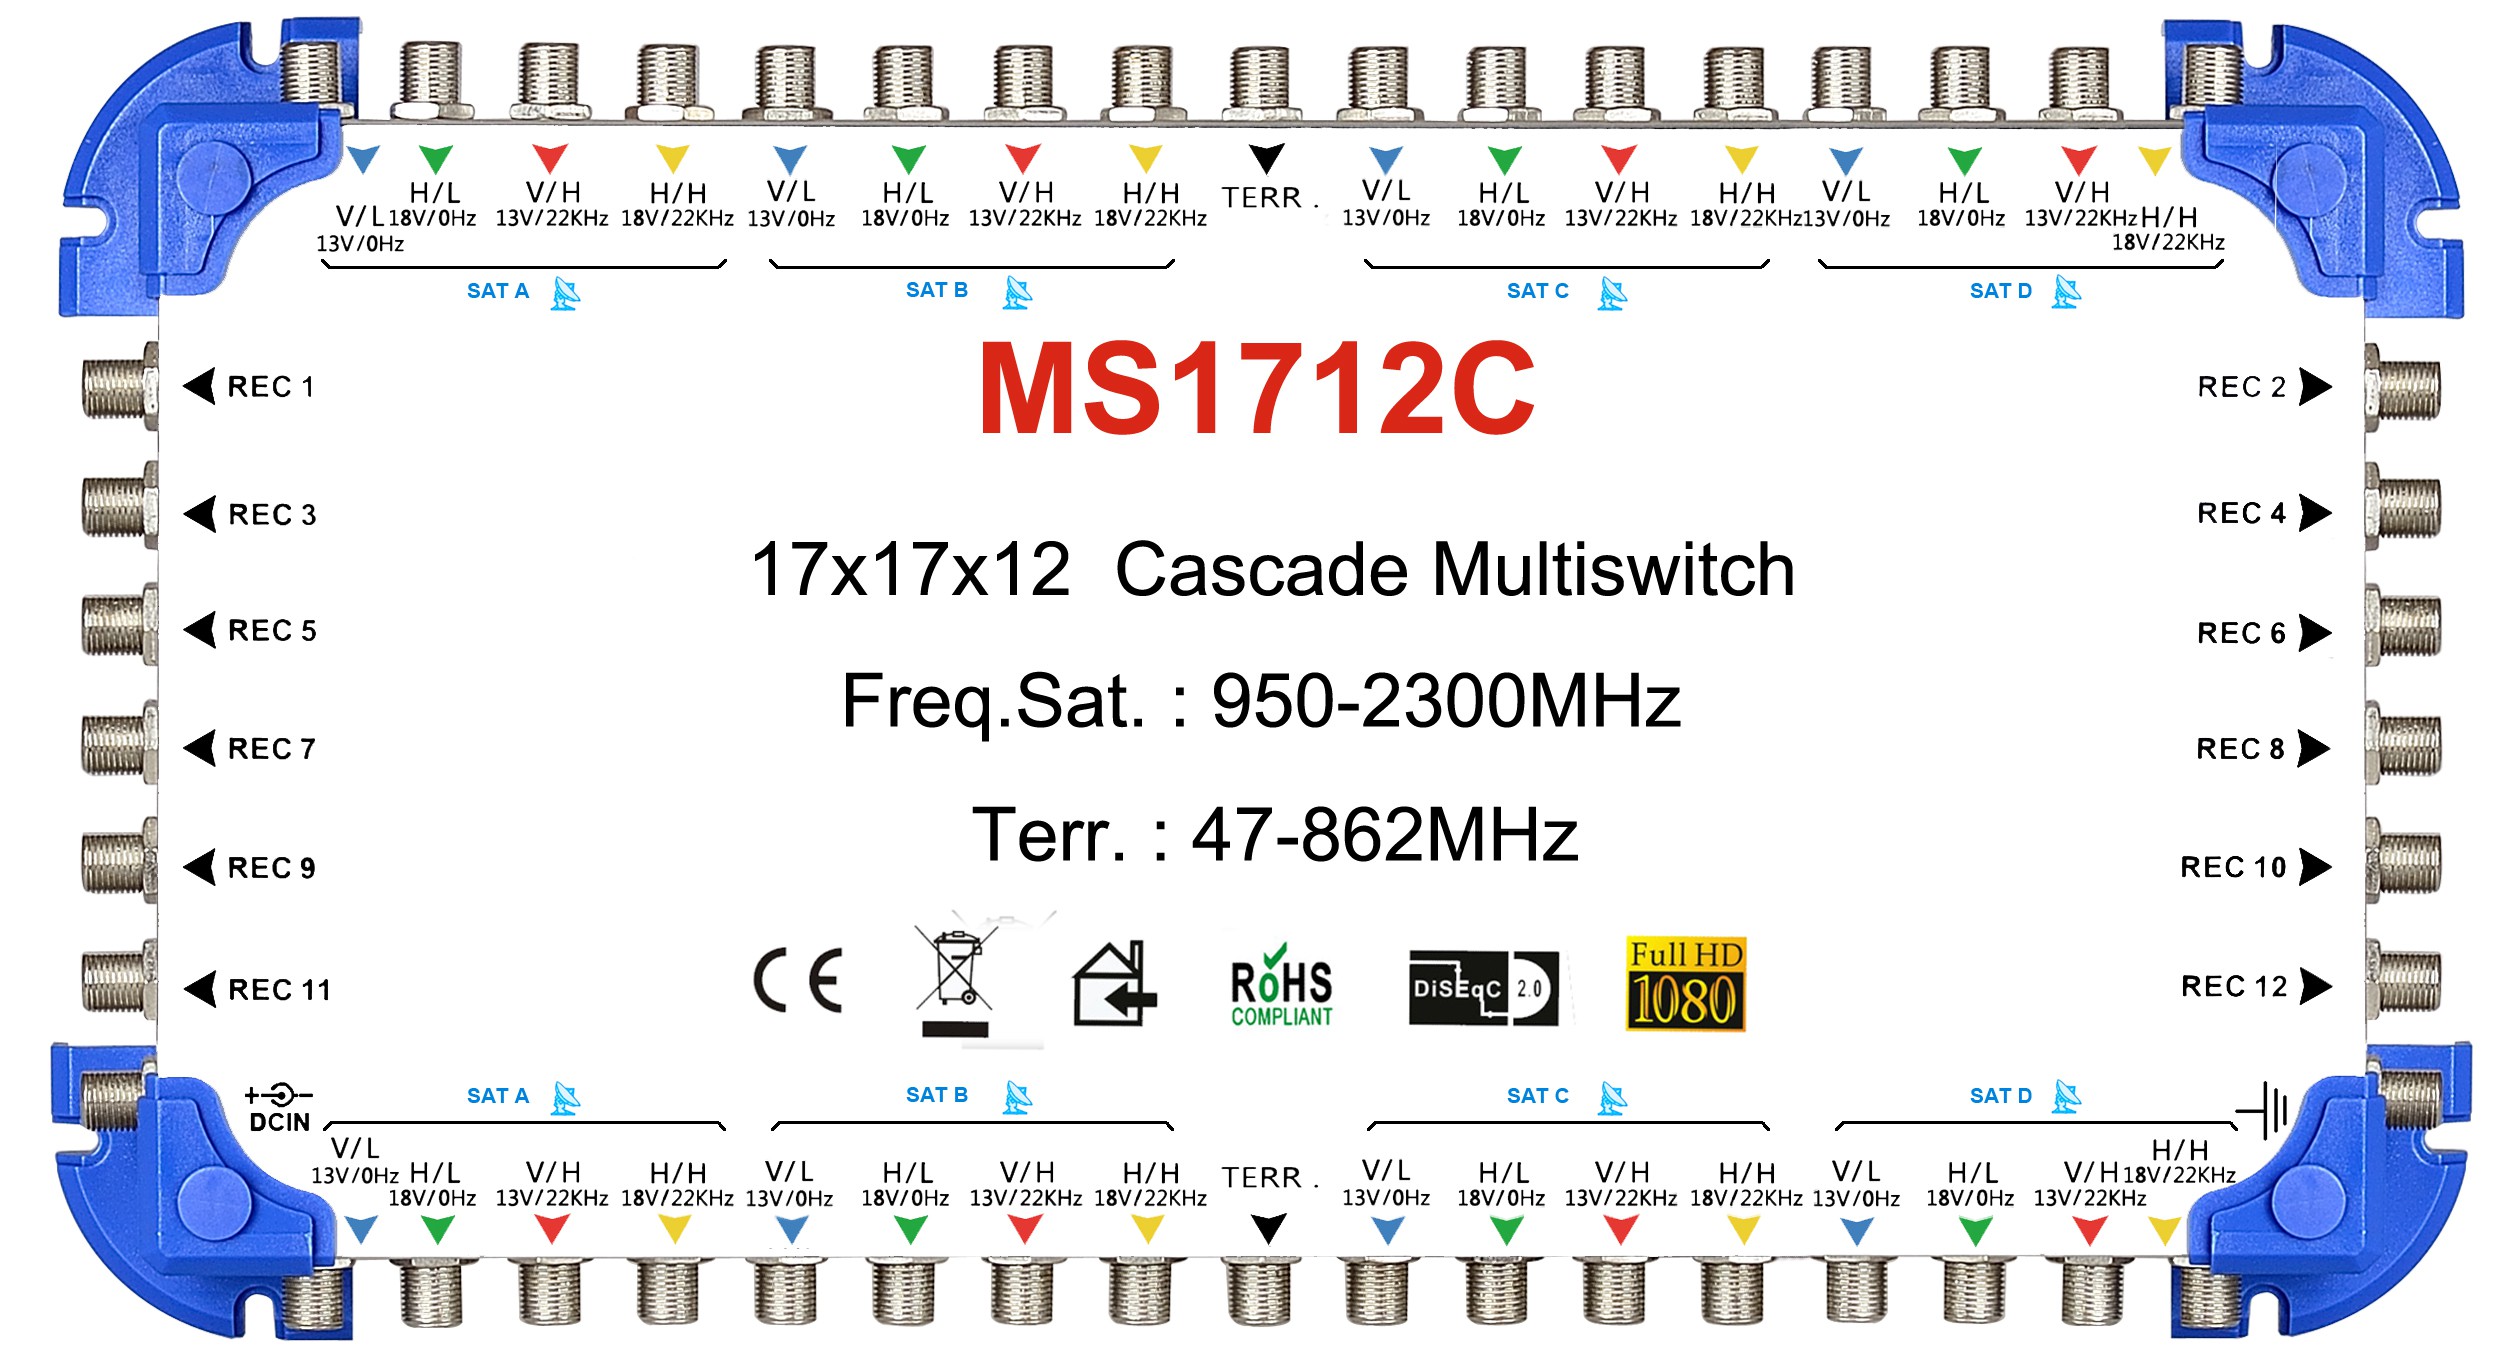 17x12 satélite multi-switch, Cascade multiswitch